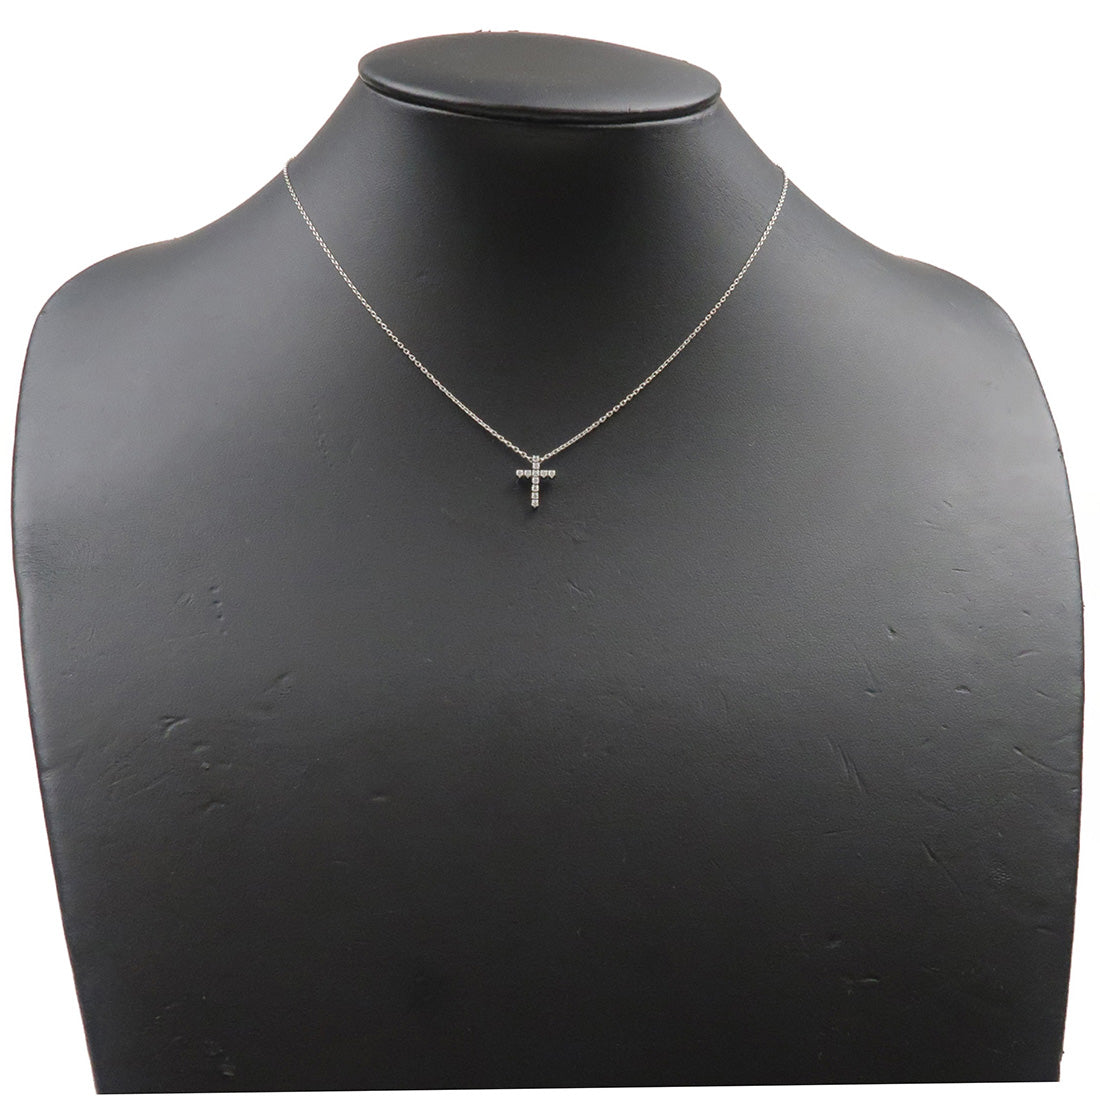 STAR JEWELRY Cross Diamond Necklace 0.1ct K18WG White Gold